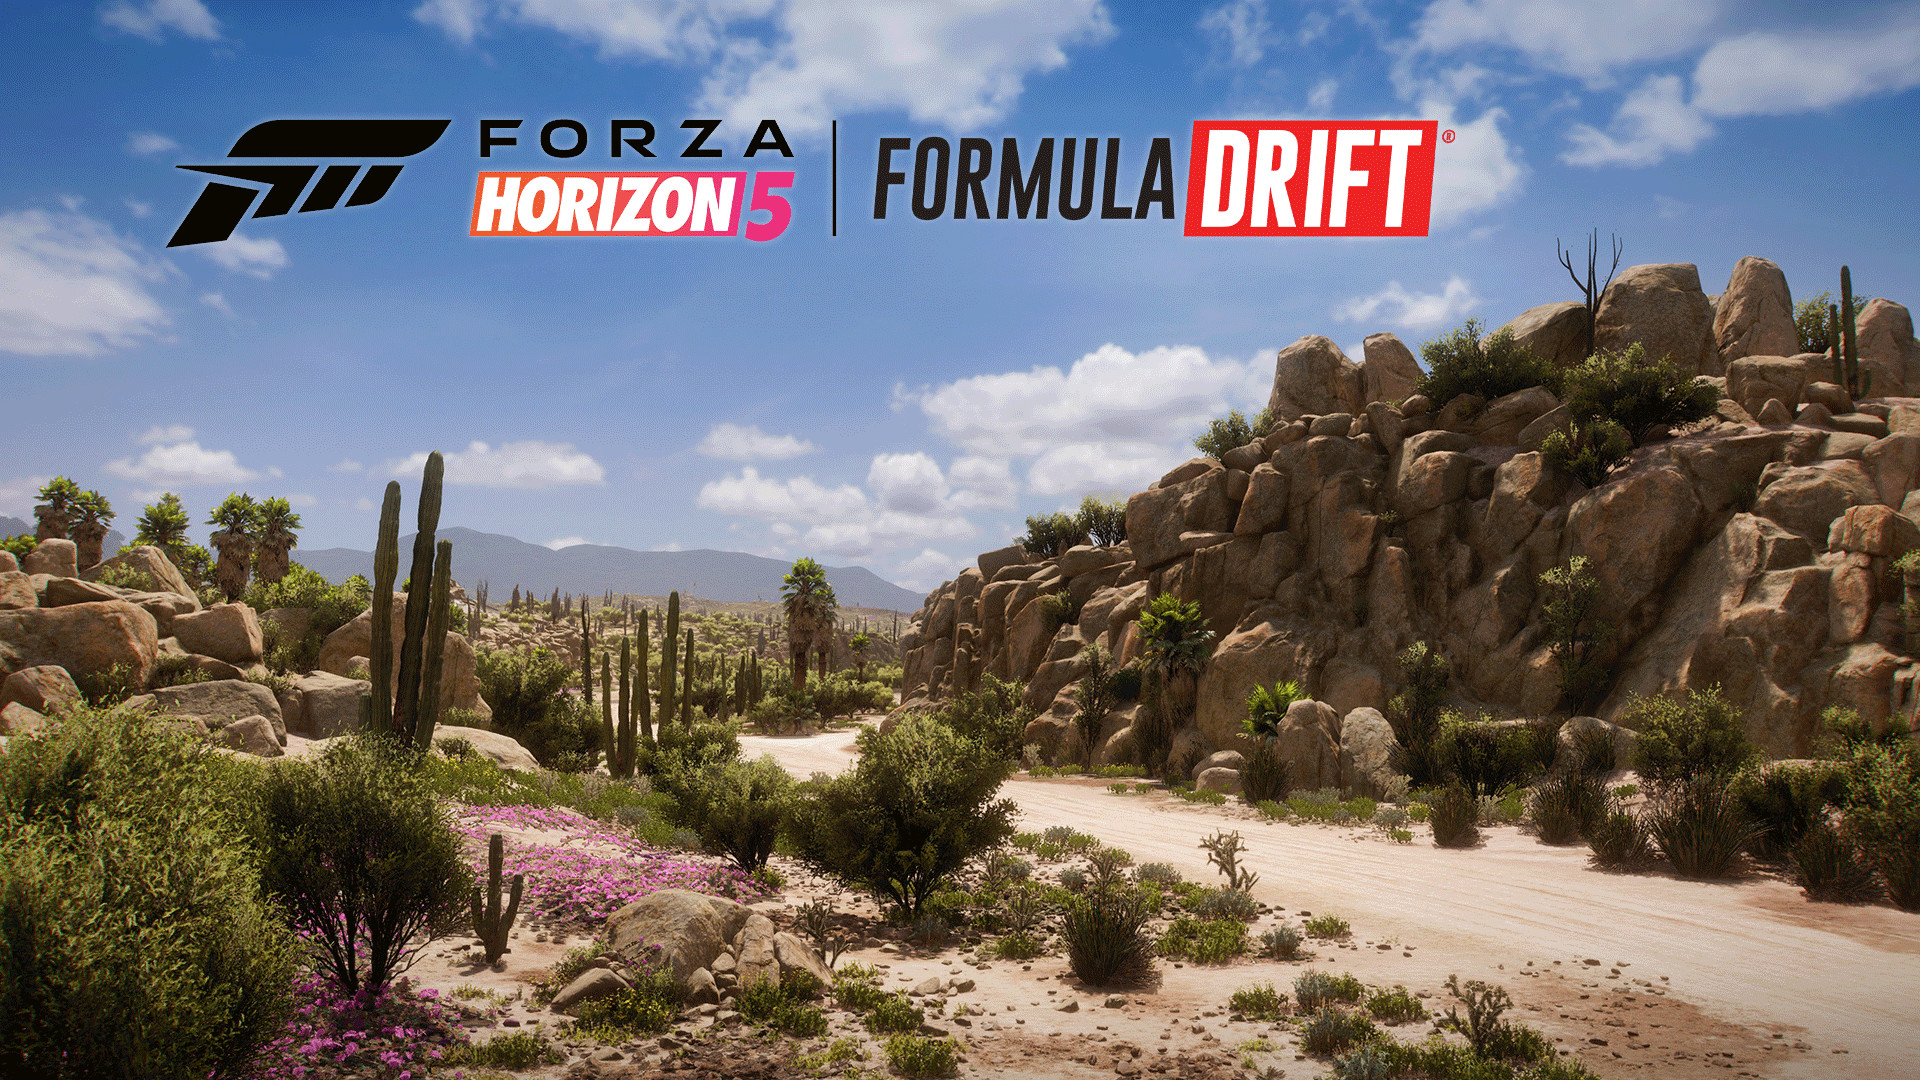 [$ 9.68] Forza Horizon 5 - Formula Drift Pack DLC Steam Altergift